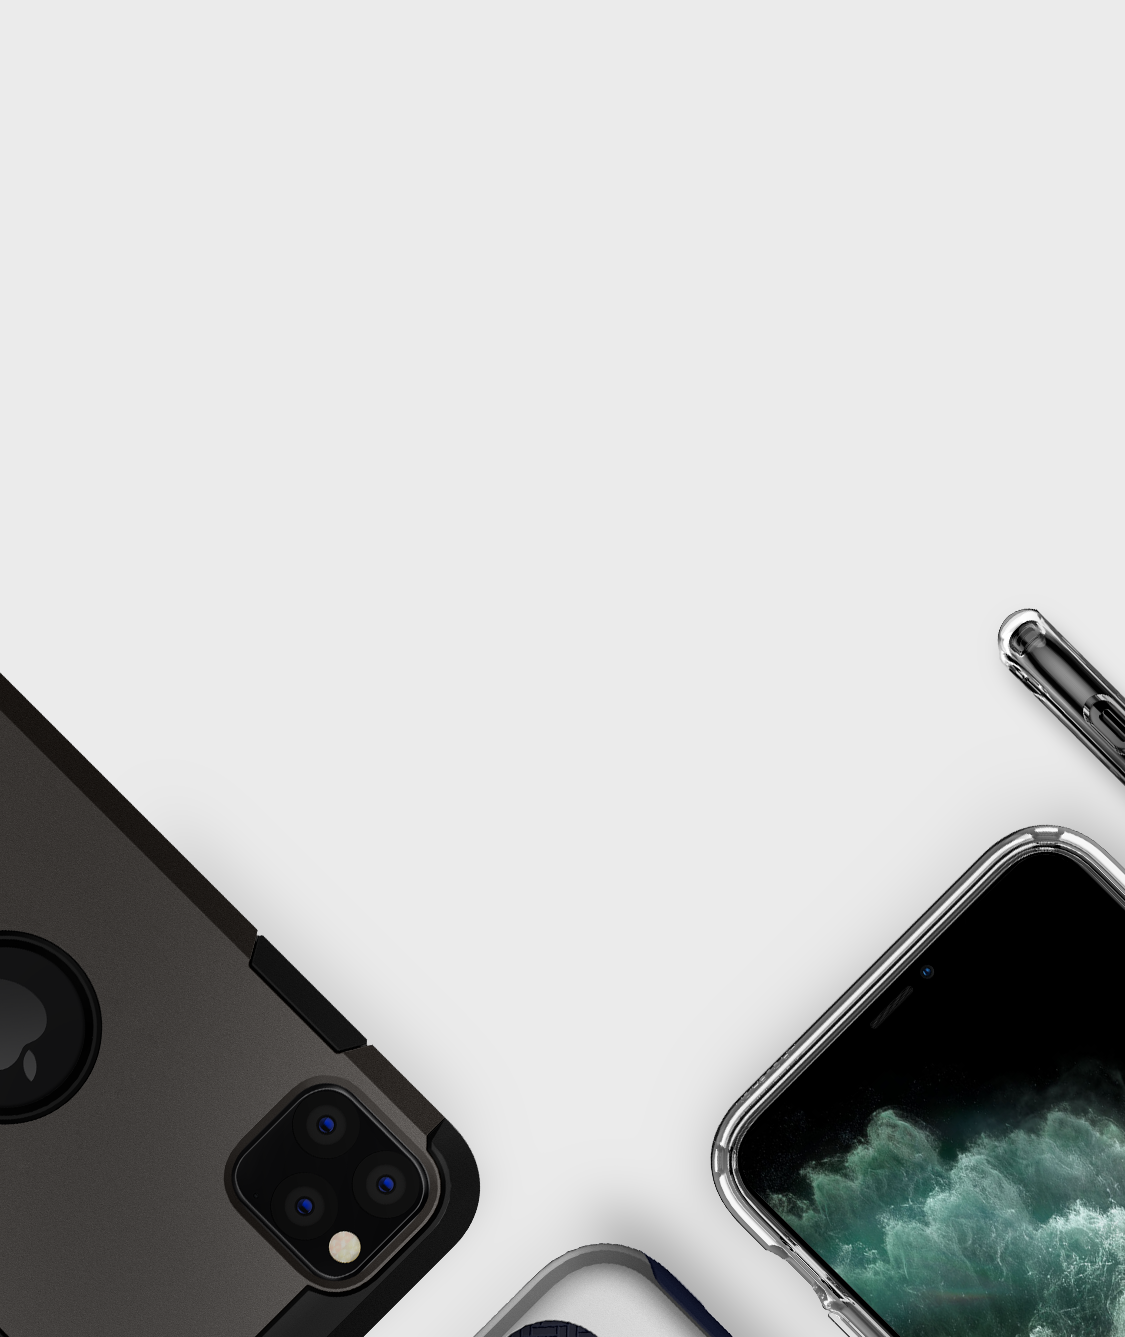 Spigen Neo Hybrid Case for Apple iPhone 11 Review 